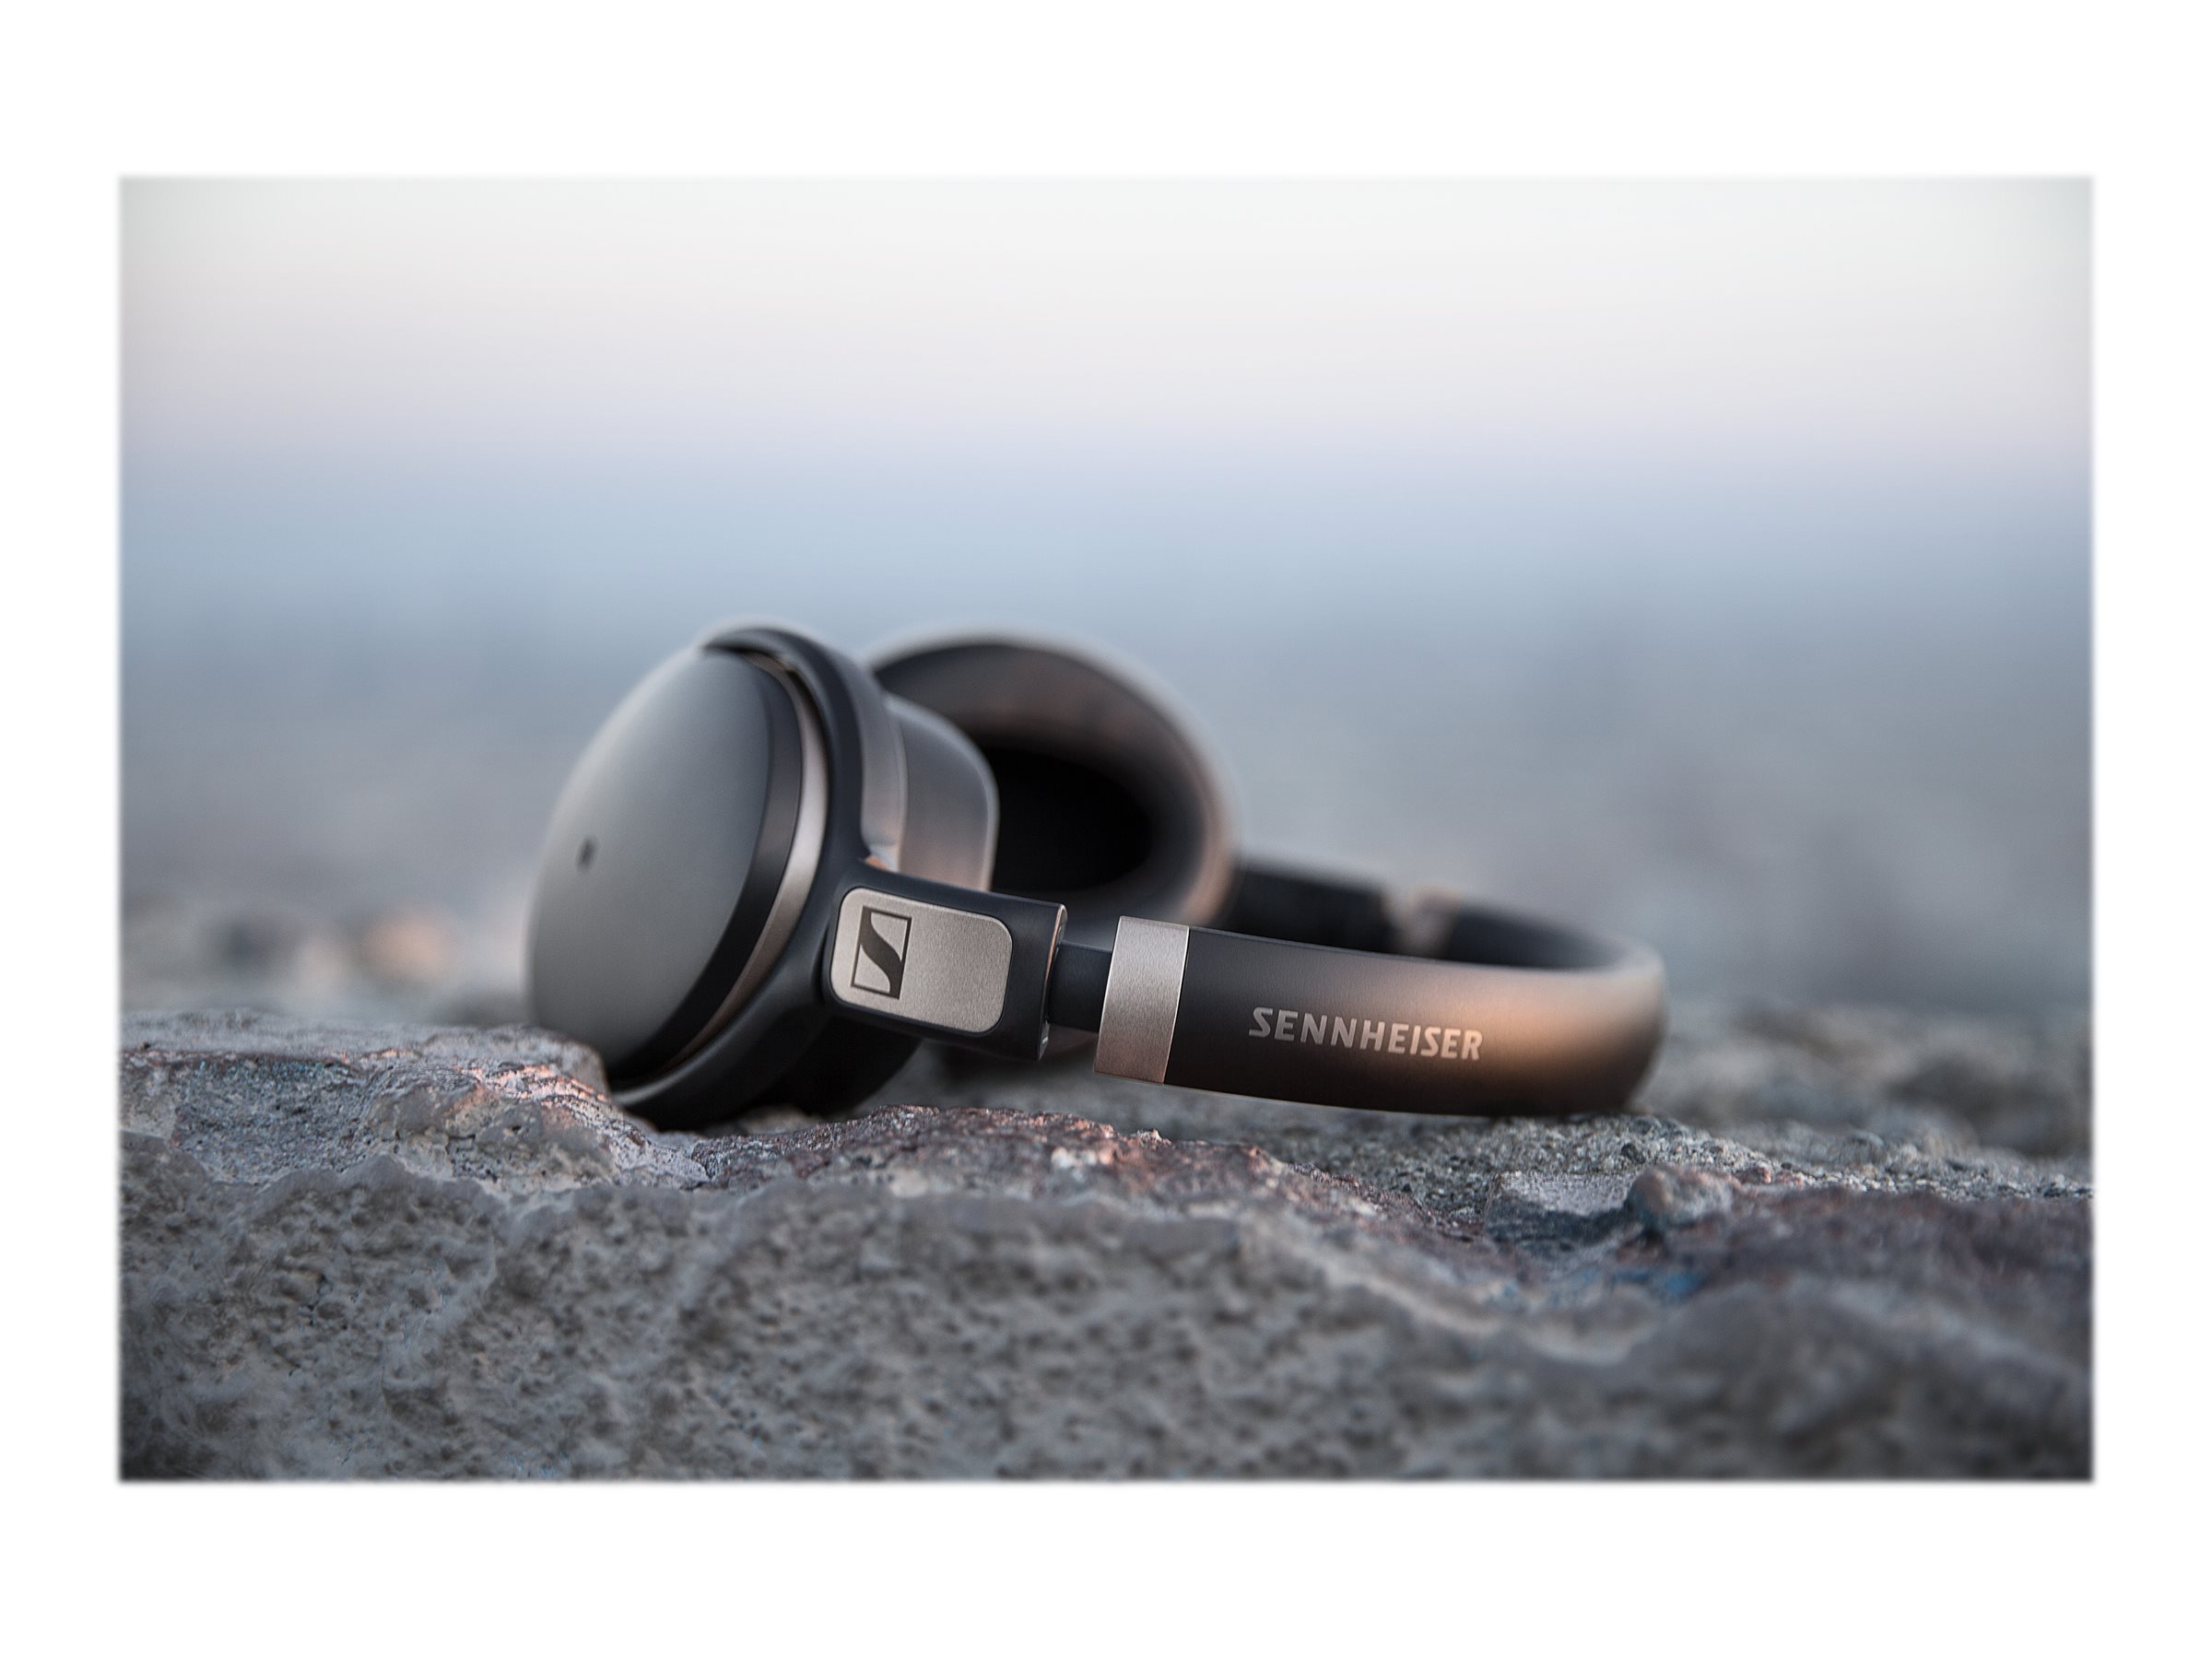 Sennheiser Bluetooth Noise-Canceling Over-Ear Headphones, Black, HD 4.50 BTNC - image 4 of 14